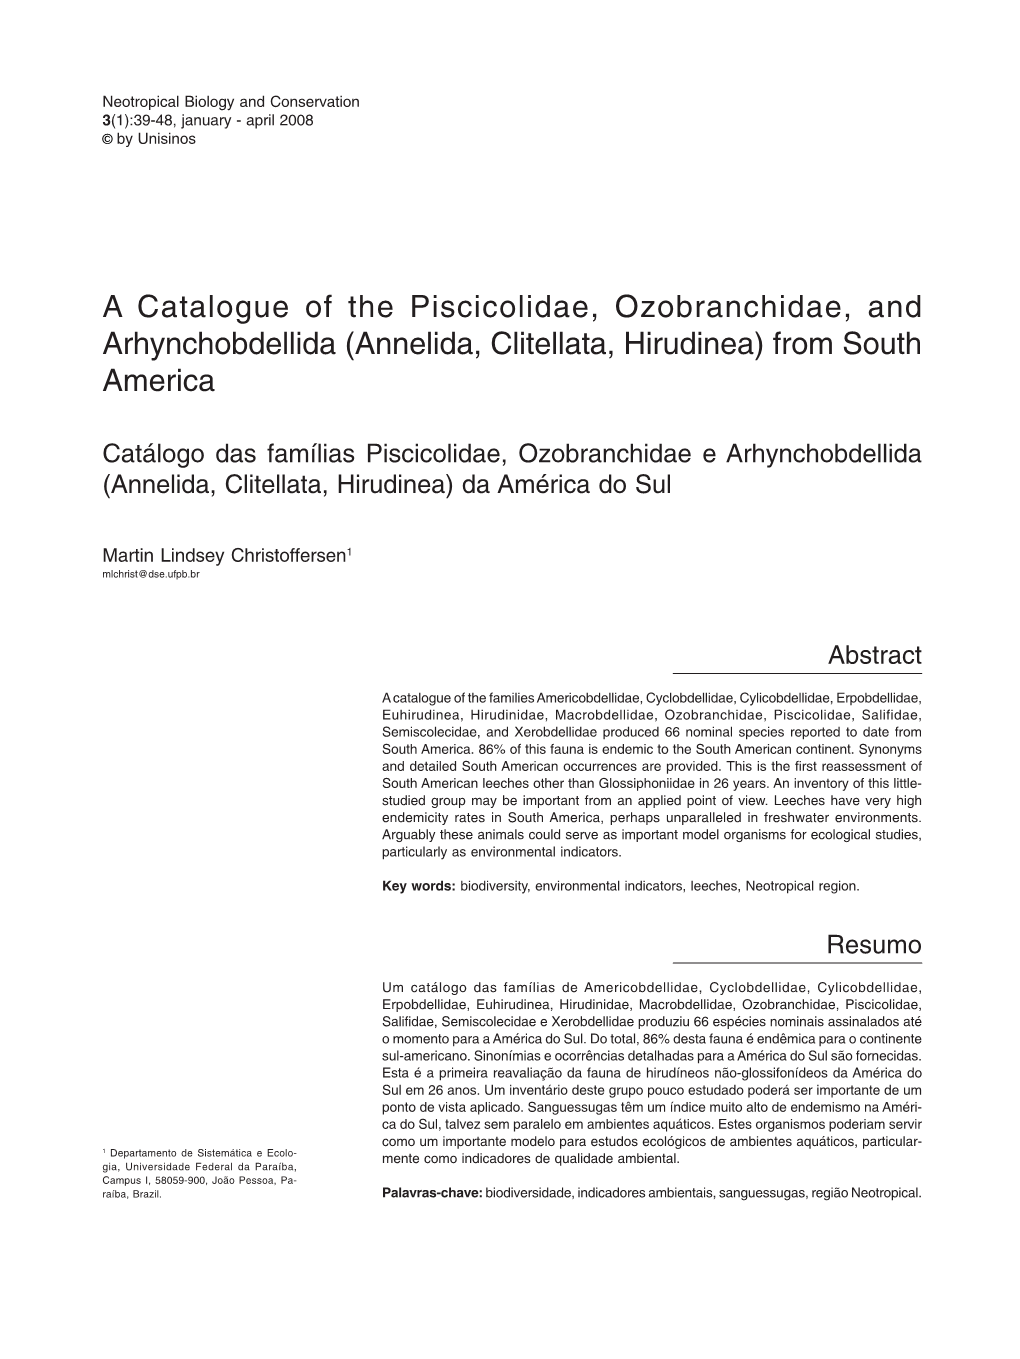 A Catalogue of the Piscicolidae, Ozobranchidae, and Arhynchobdellida (Annelida, Clitellata, Hirudinea) from South America